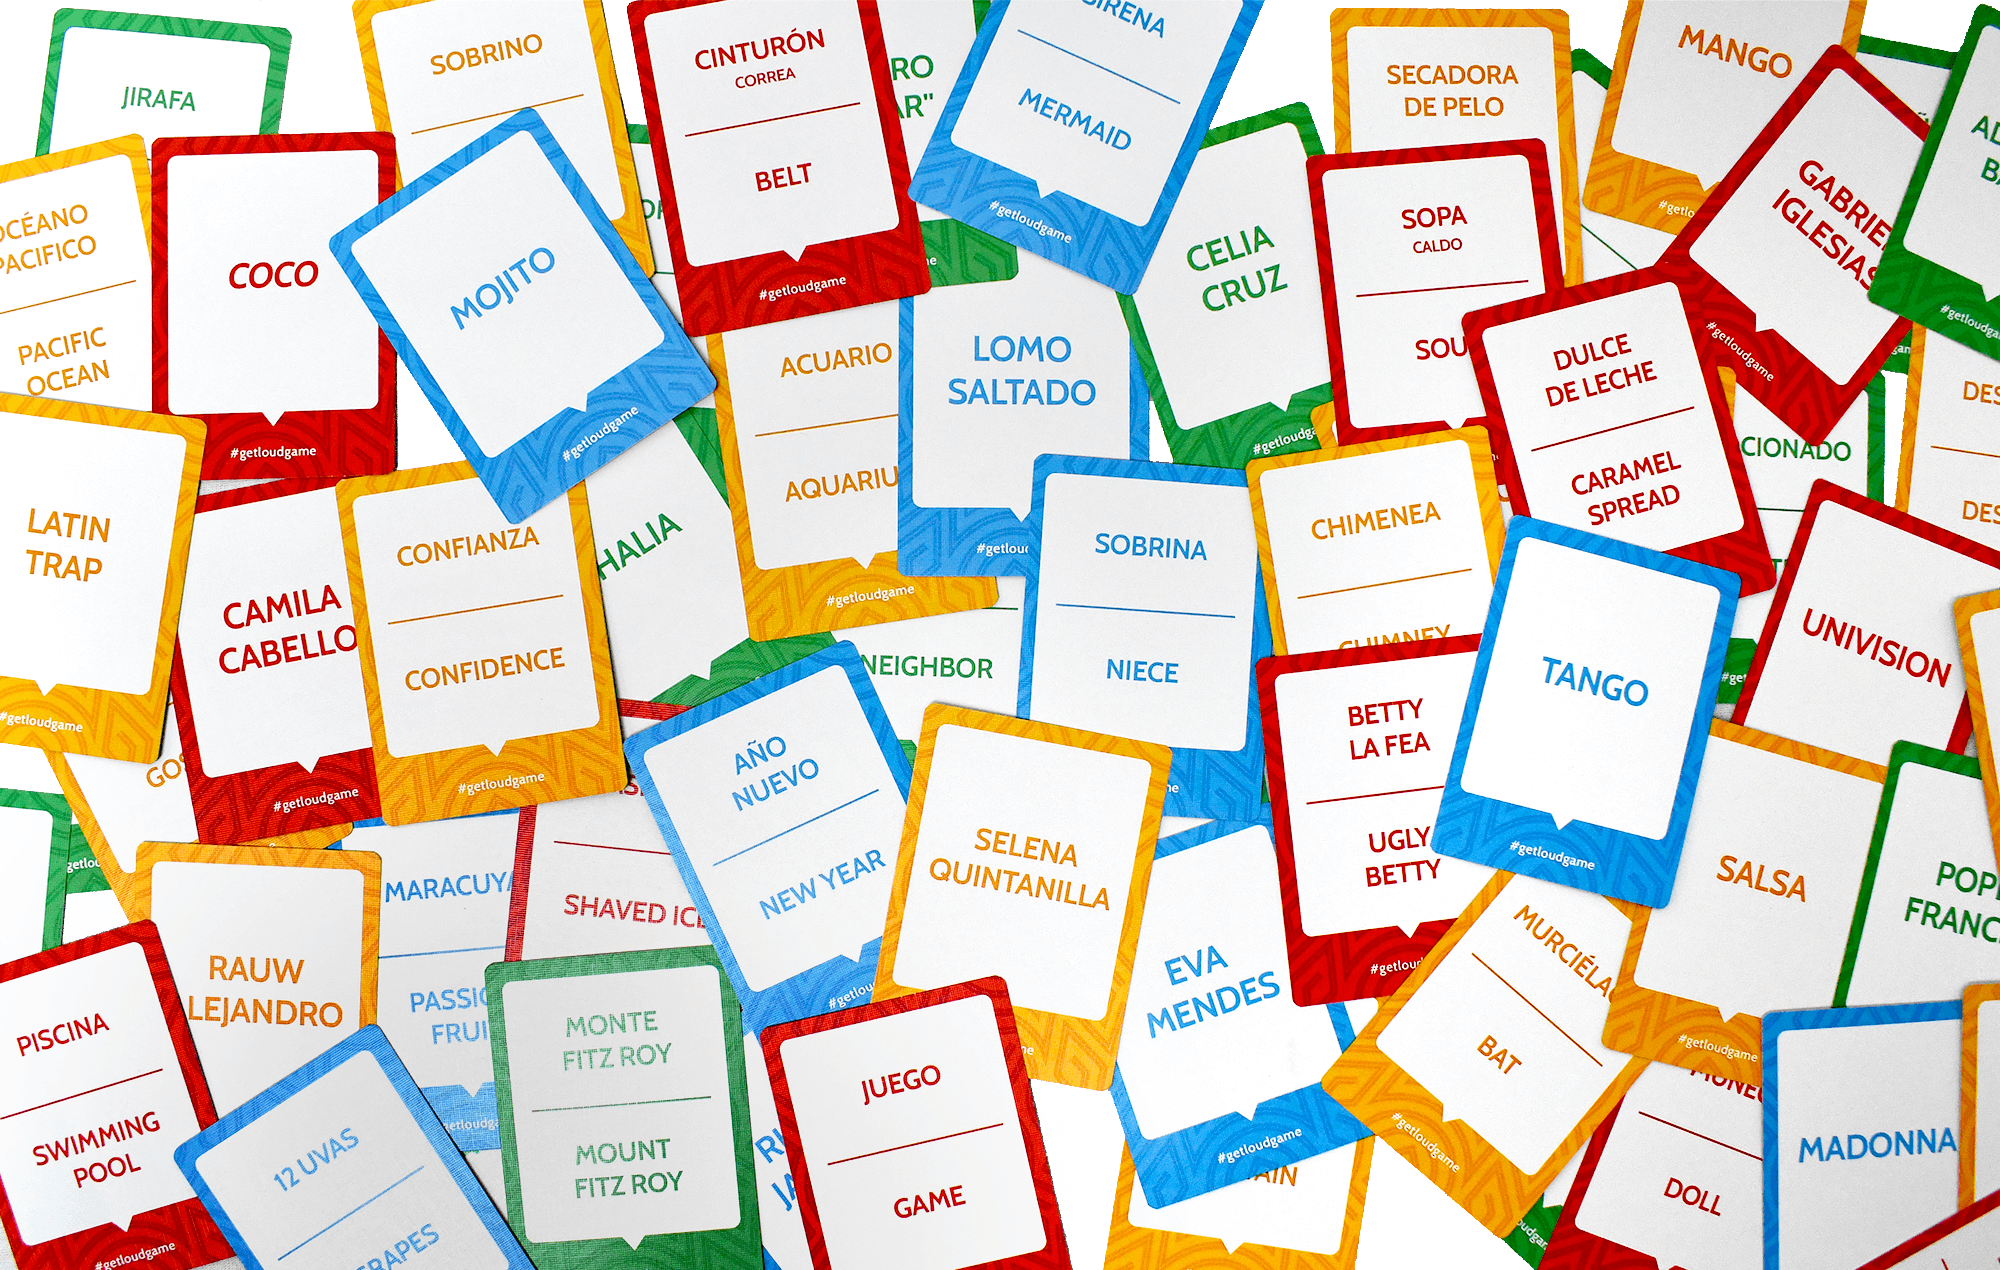 bilingual board games That Will Make You LOL